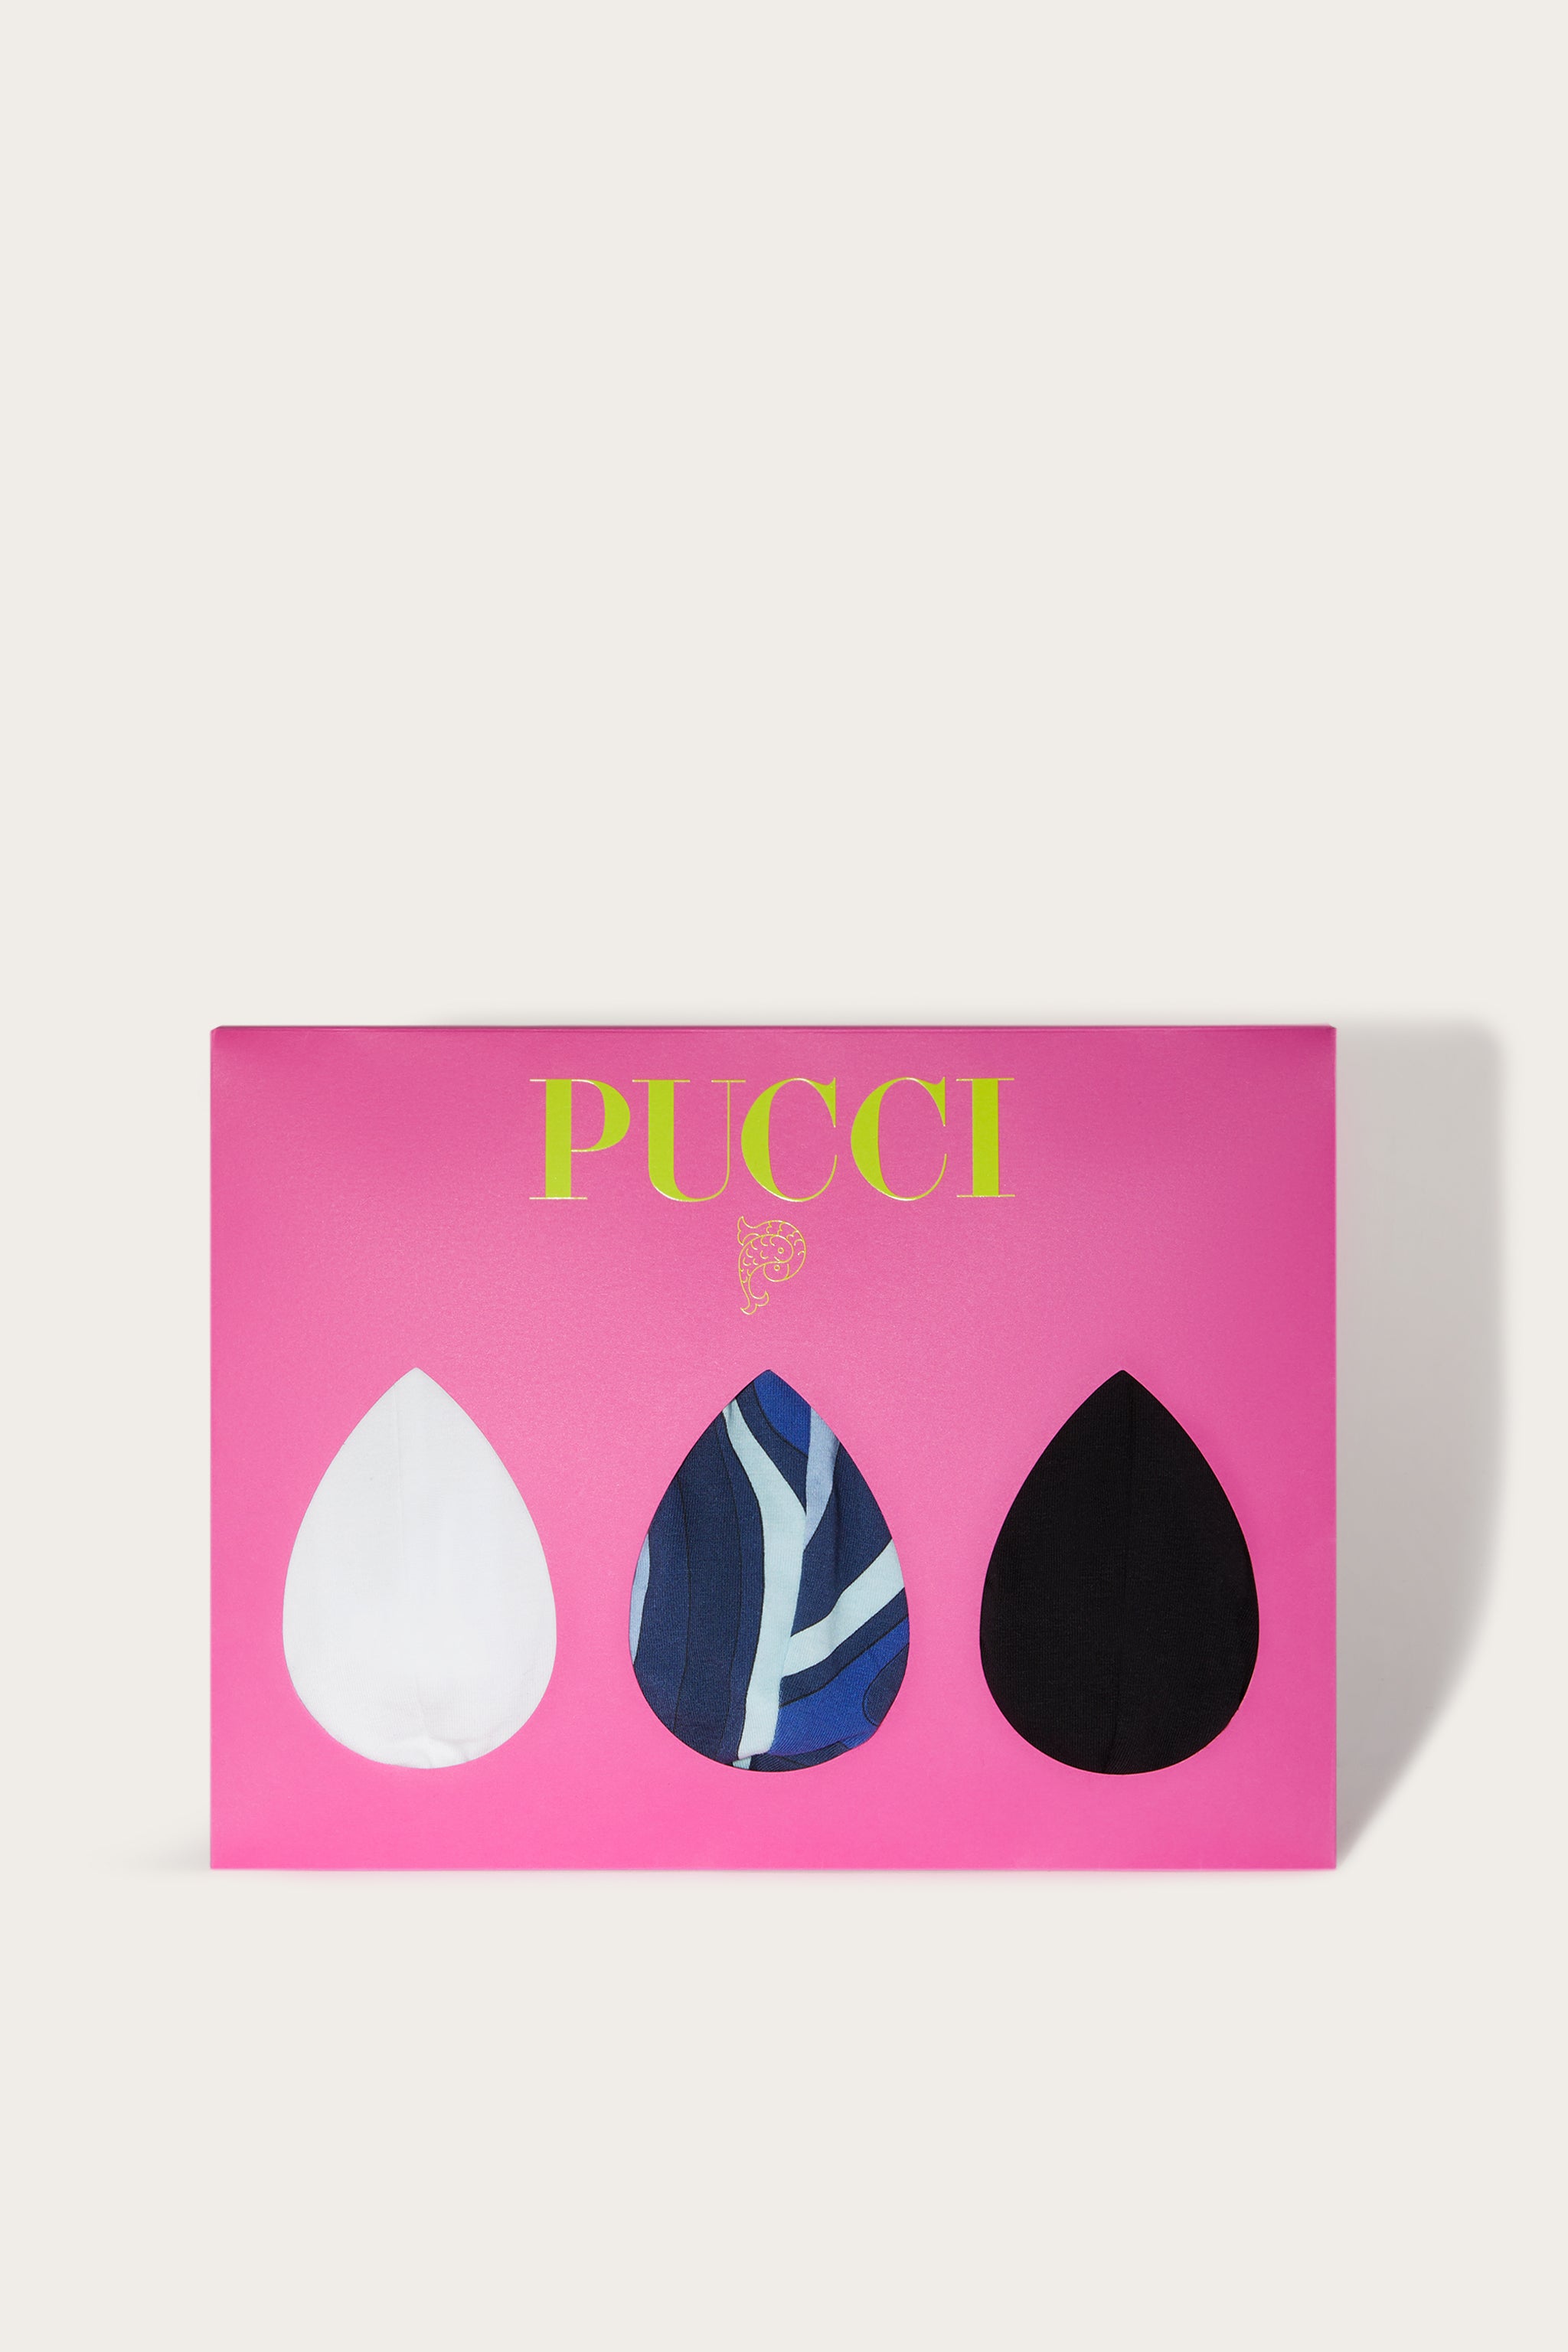 Pucci man: italian man's clothing brand | Pucci